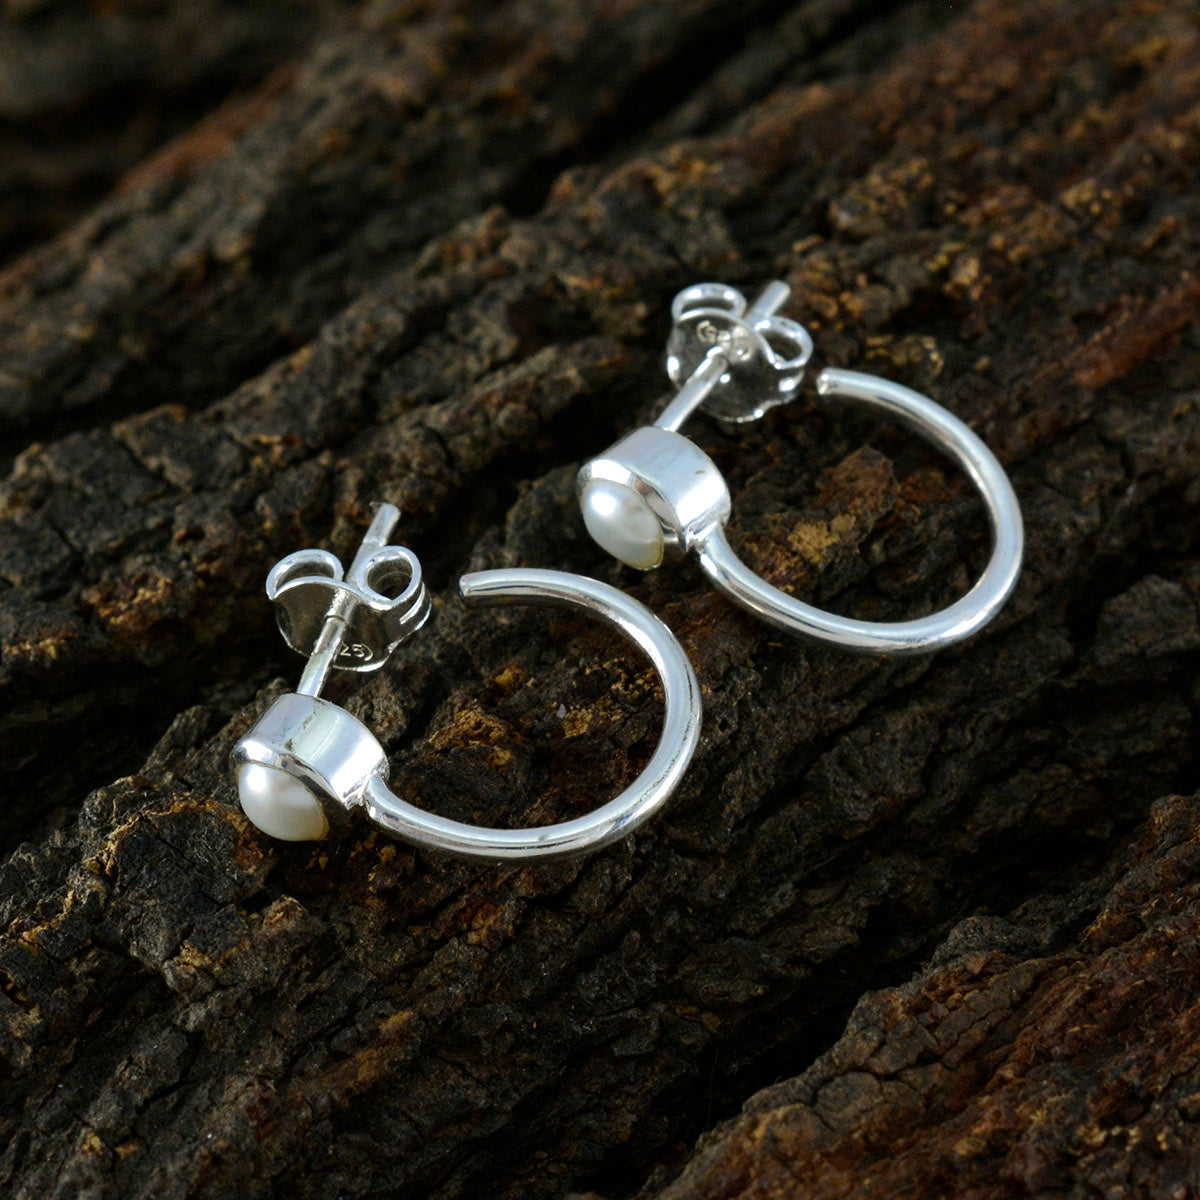 Riyo Bewitching 925 Sterling Silver Earring For Girl Pearl Earring Bezel Setting White Earring Stud Earring